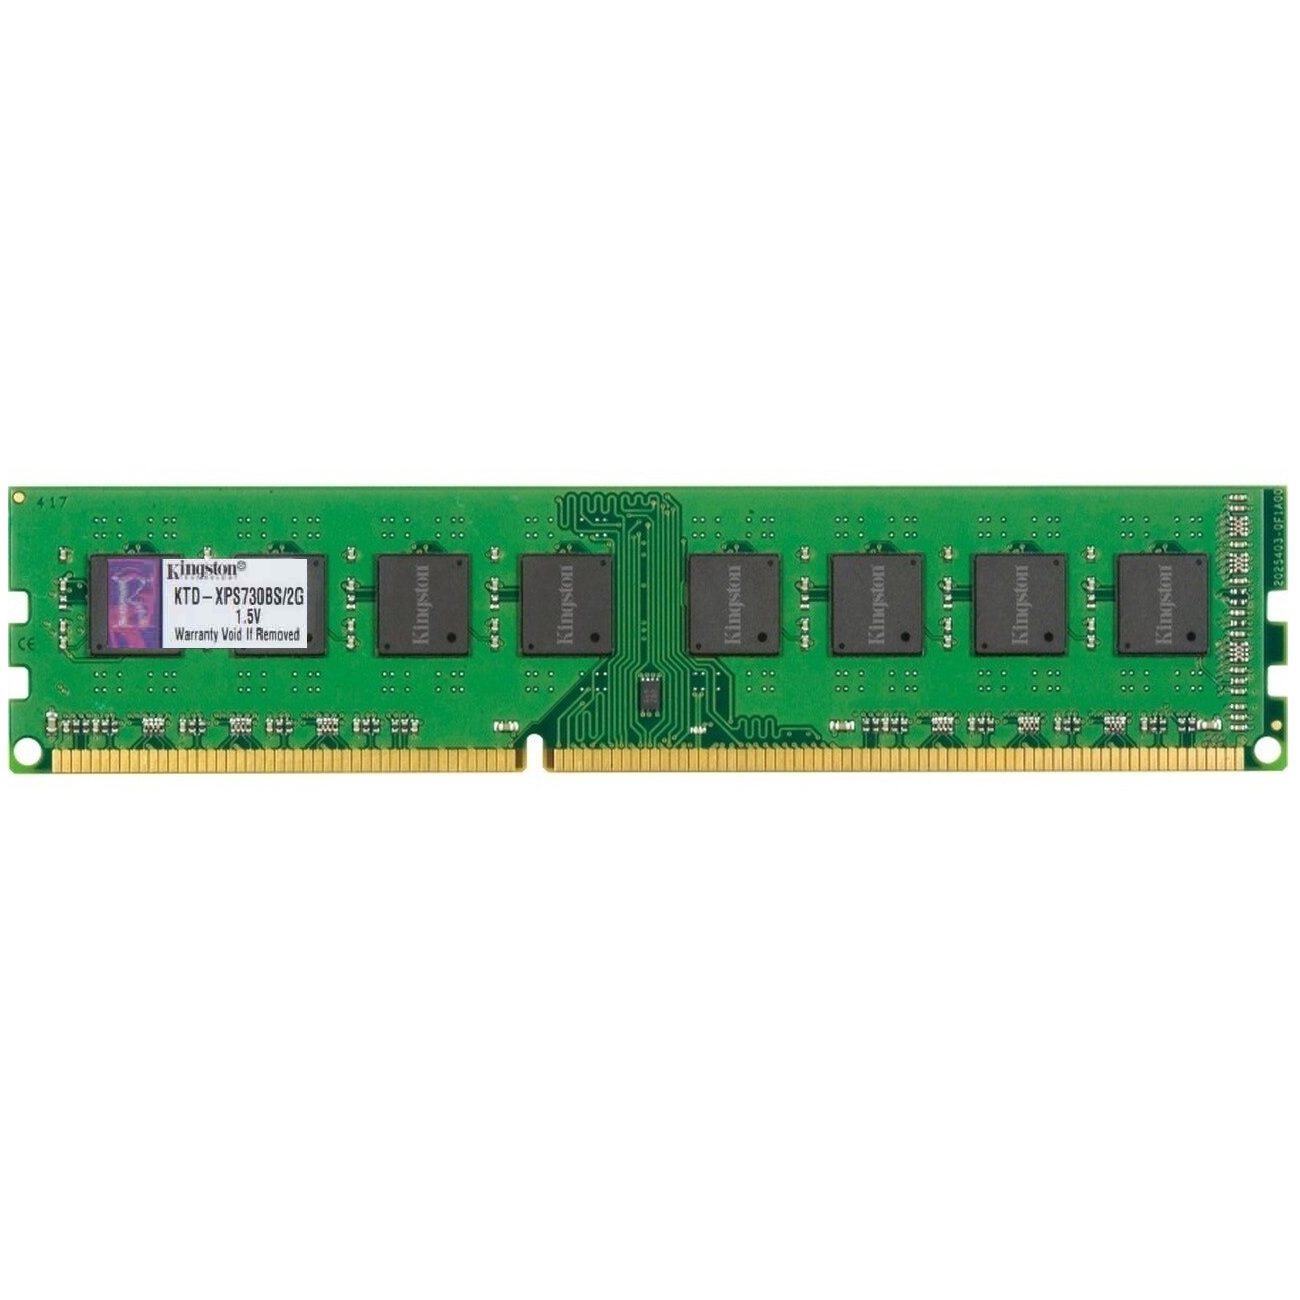 تصویر رم سرور DDR3 تک کاناله 1333 مگاهرتز CL9 کینگستون مدل KTD-XPS730BS/2G ظرفیت 2 گیگابایت